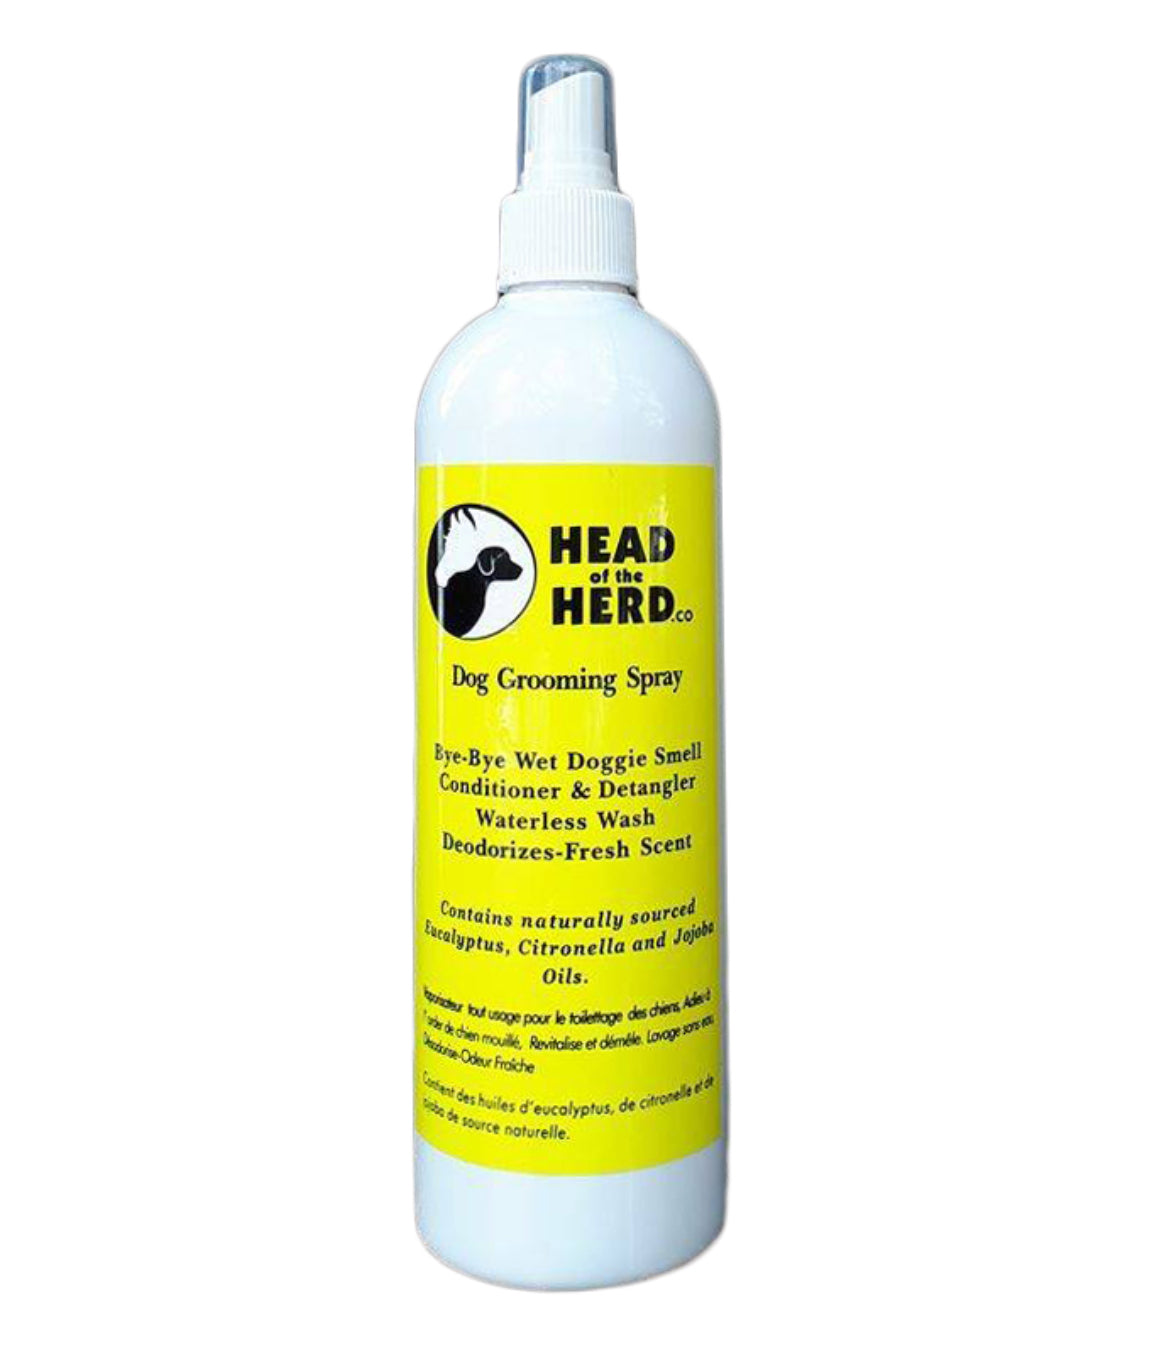 Head of the Herd Dog Grooming Spray